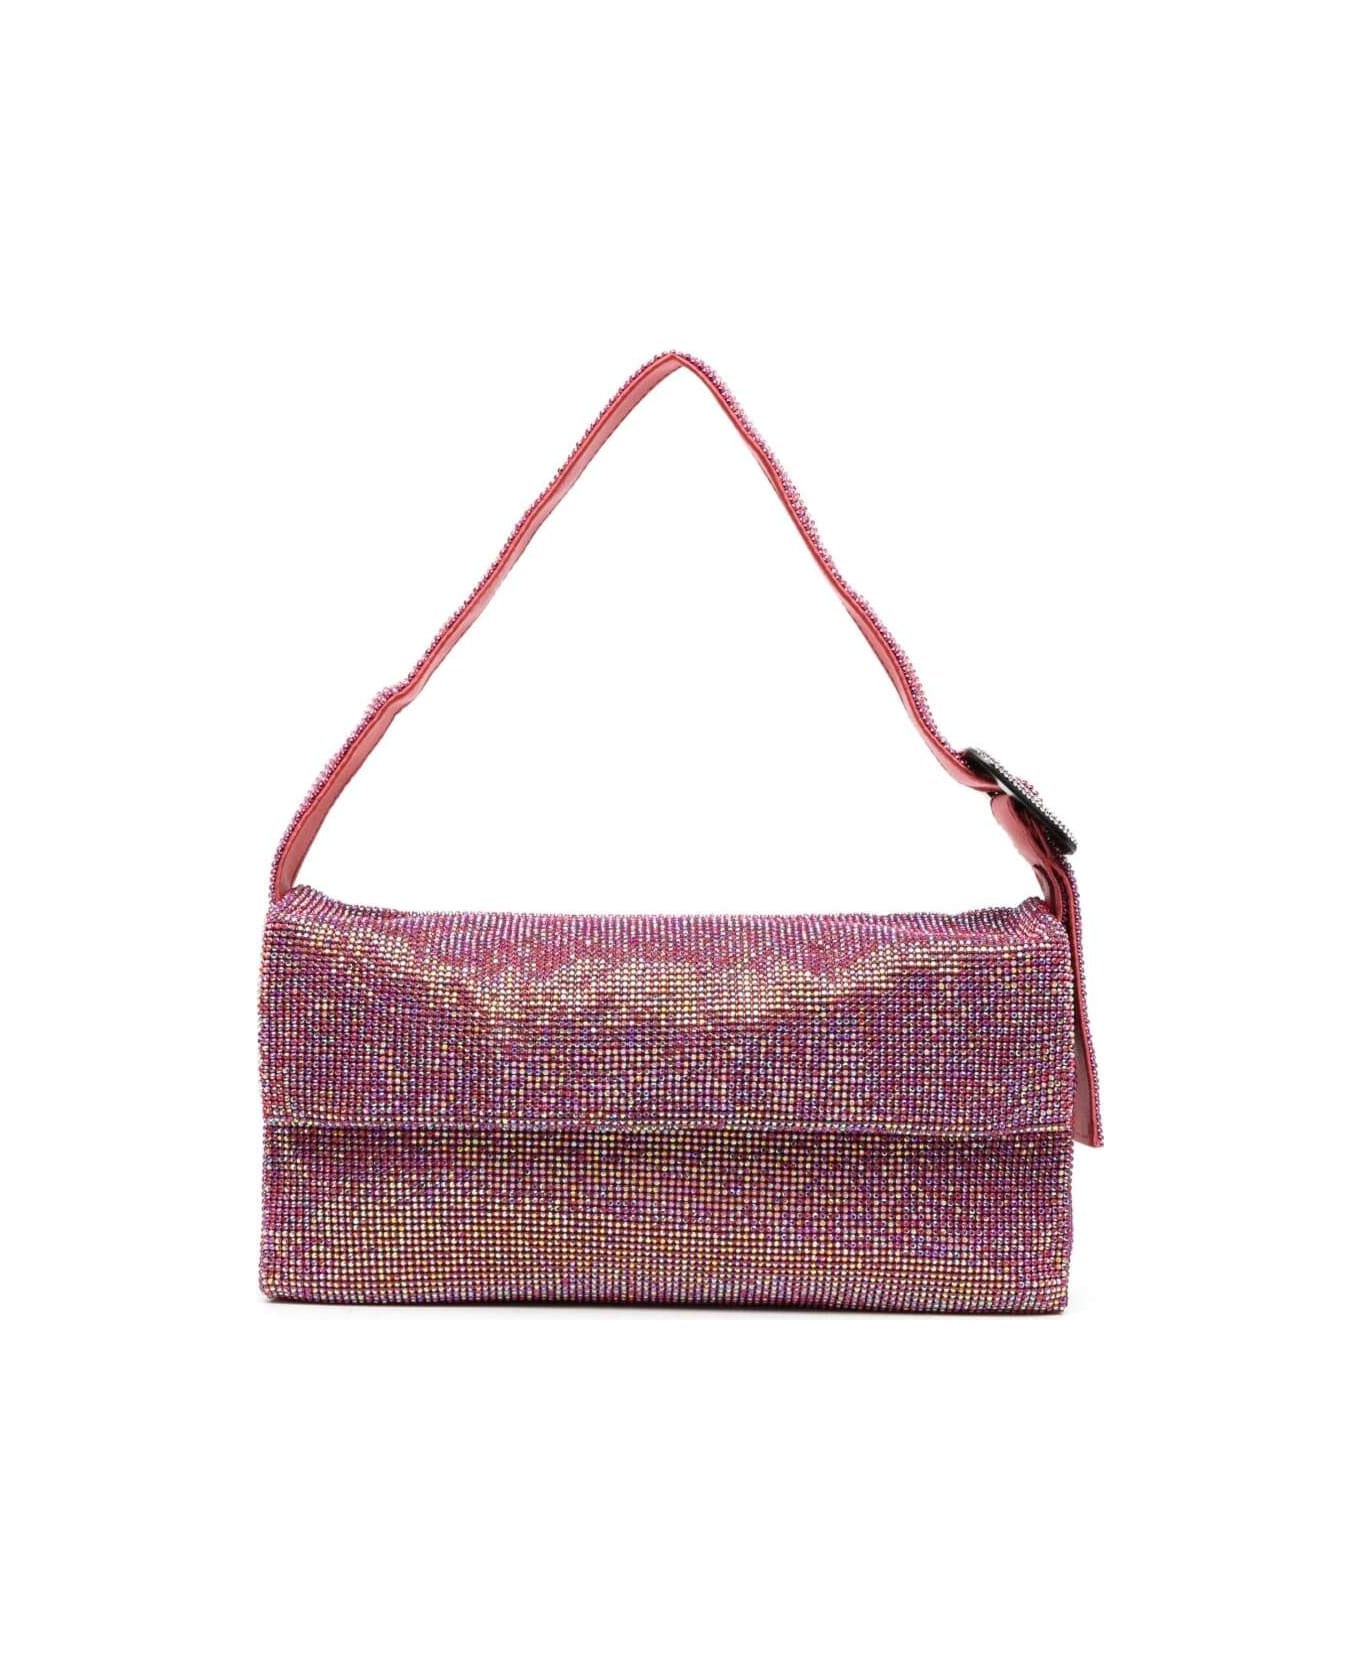 Benedetta Bruzziches Vitty La Grande Shoulder Bag With All-over Crystal Embellishment In Rhinestone Mesh Woman - Fuxia